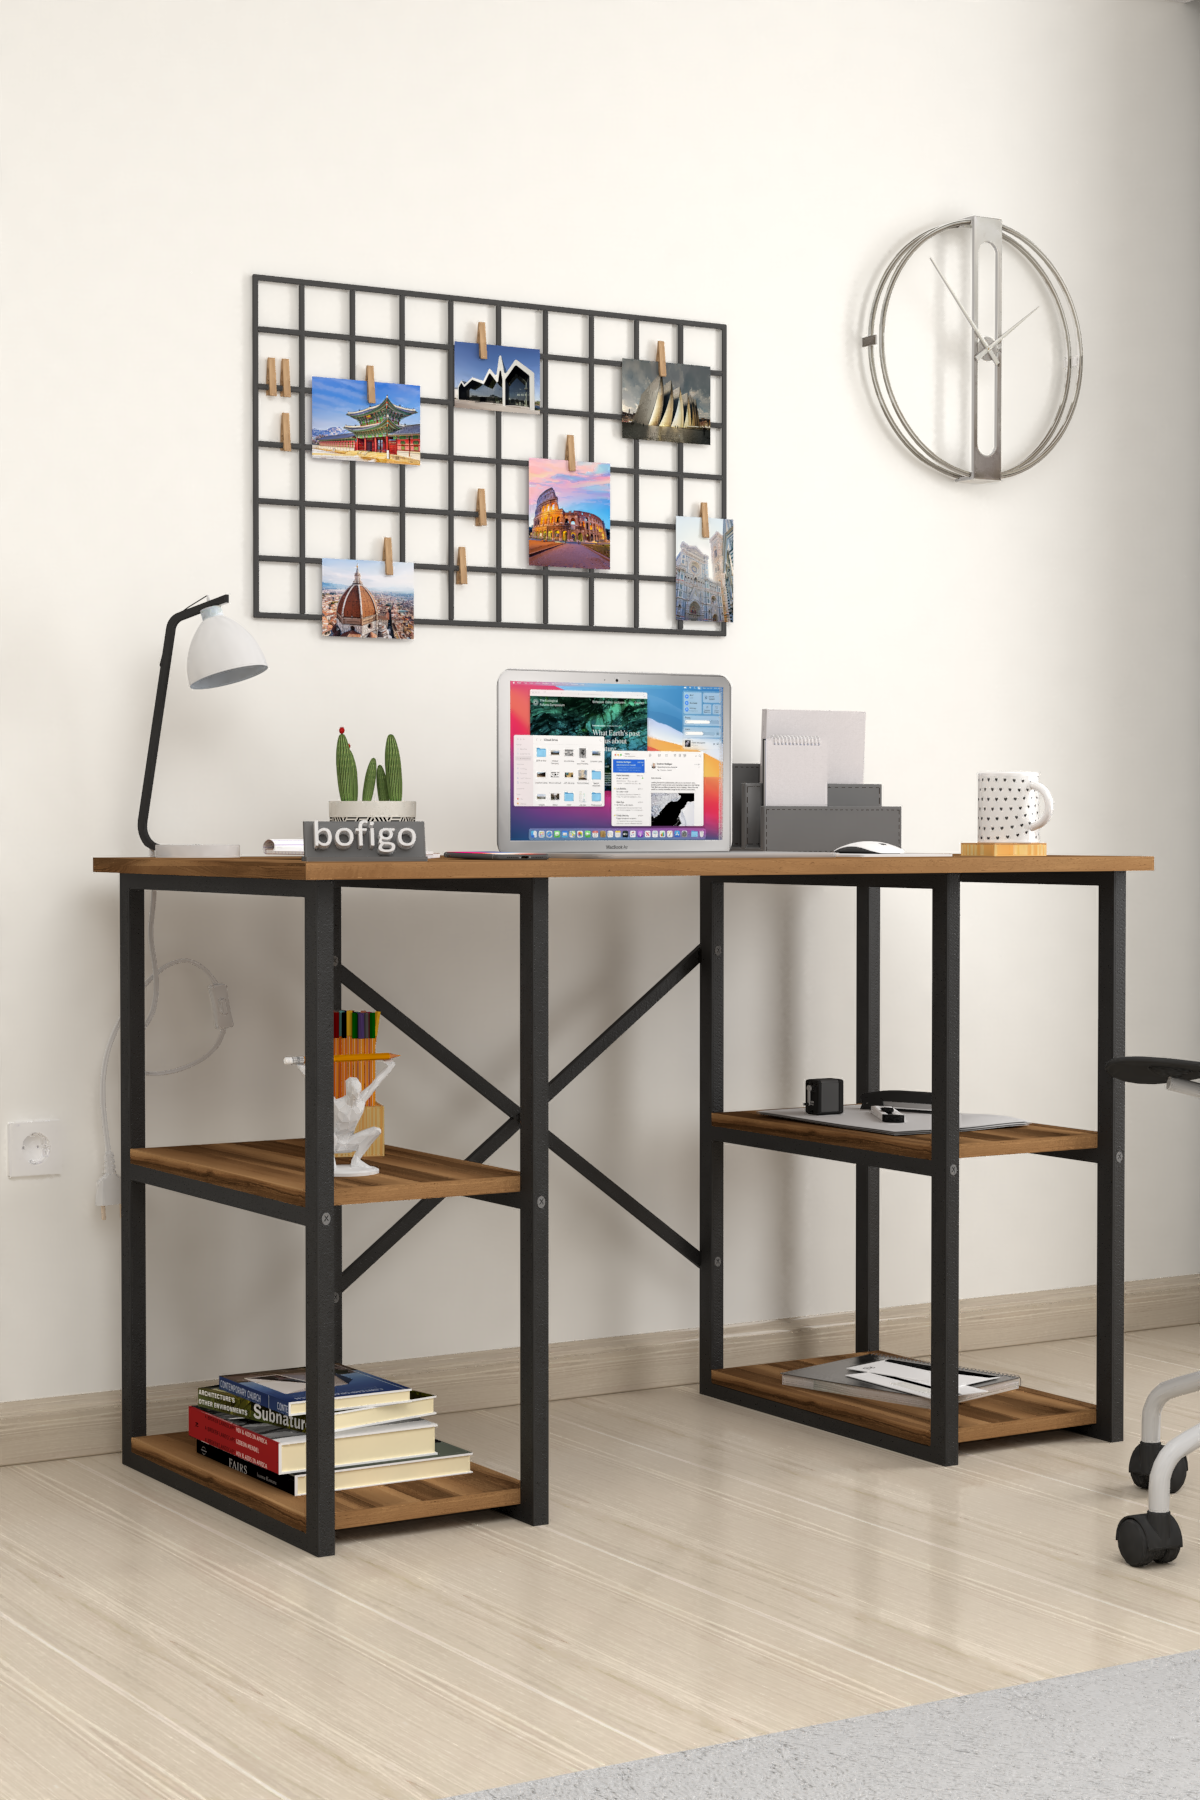 Bofigo 4 Shelf Study Desk 60x120 cm Walnut